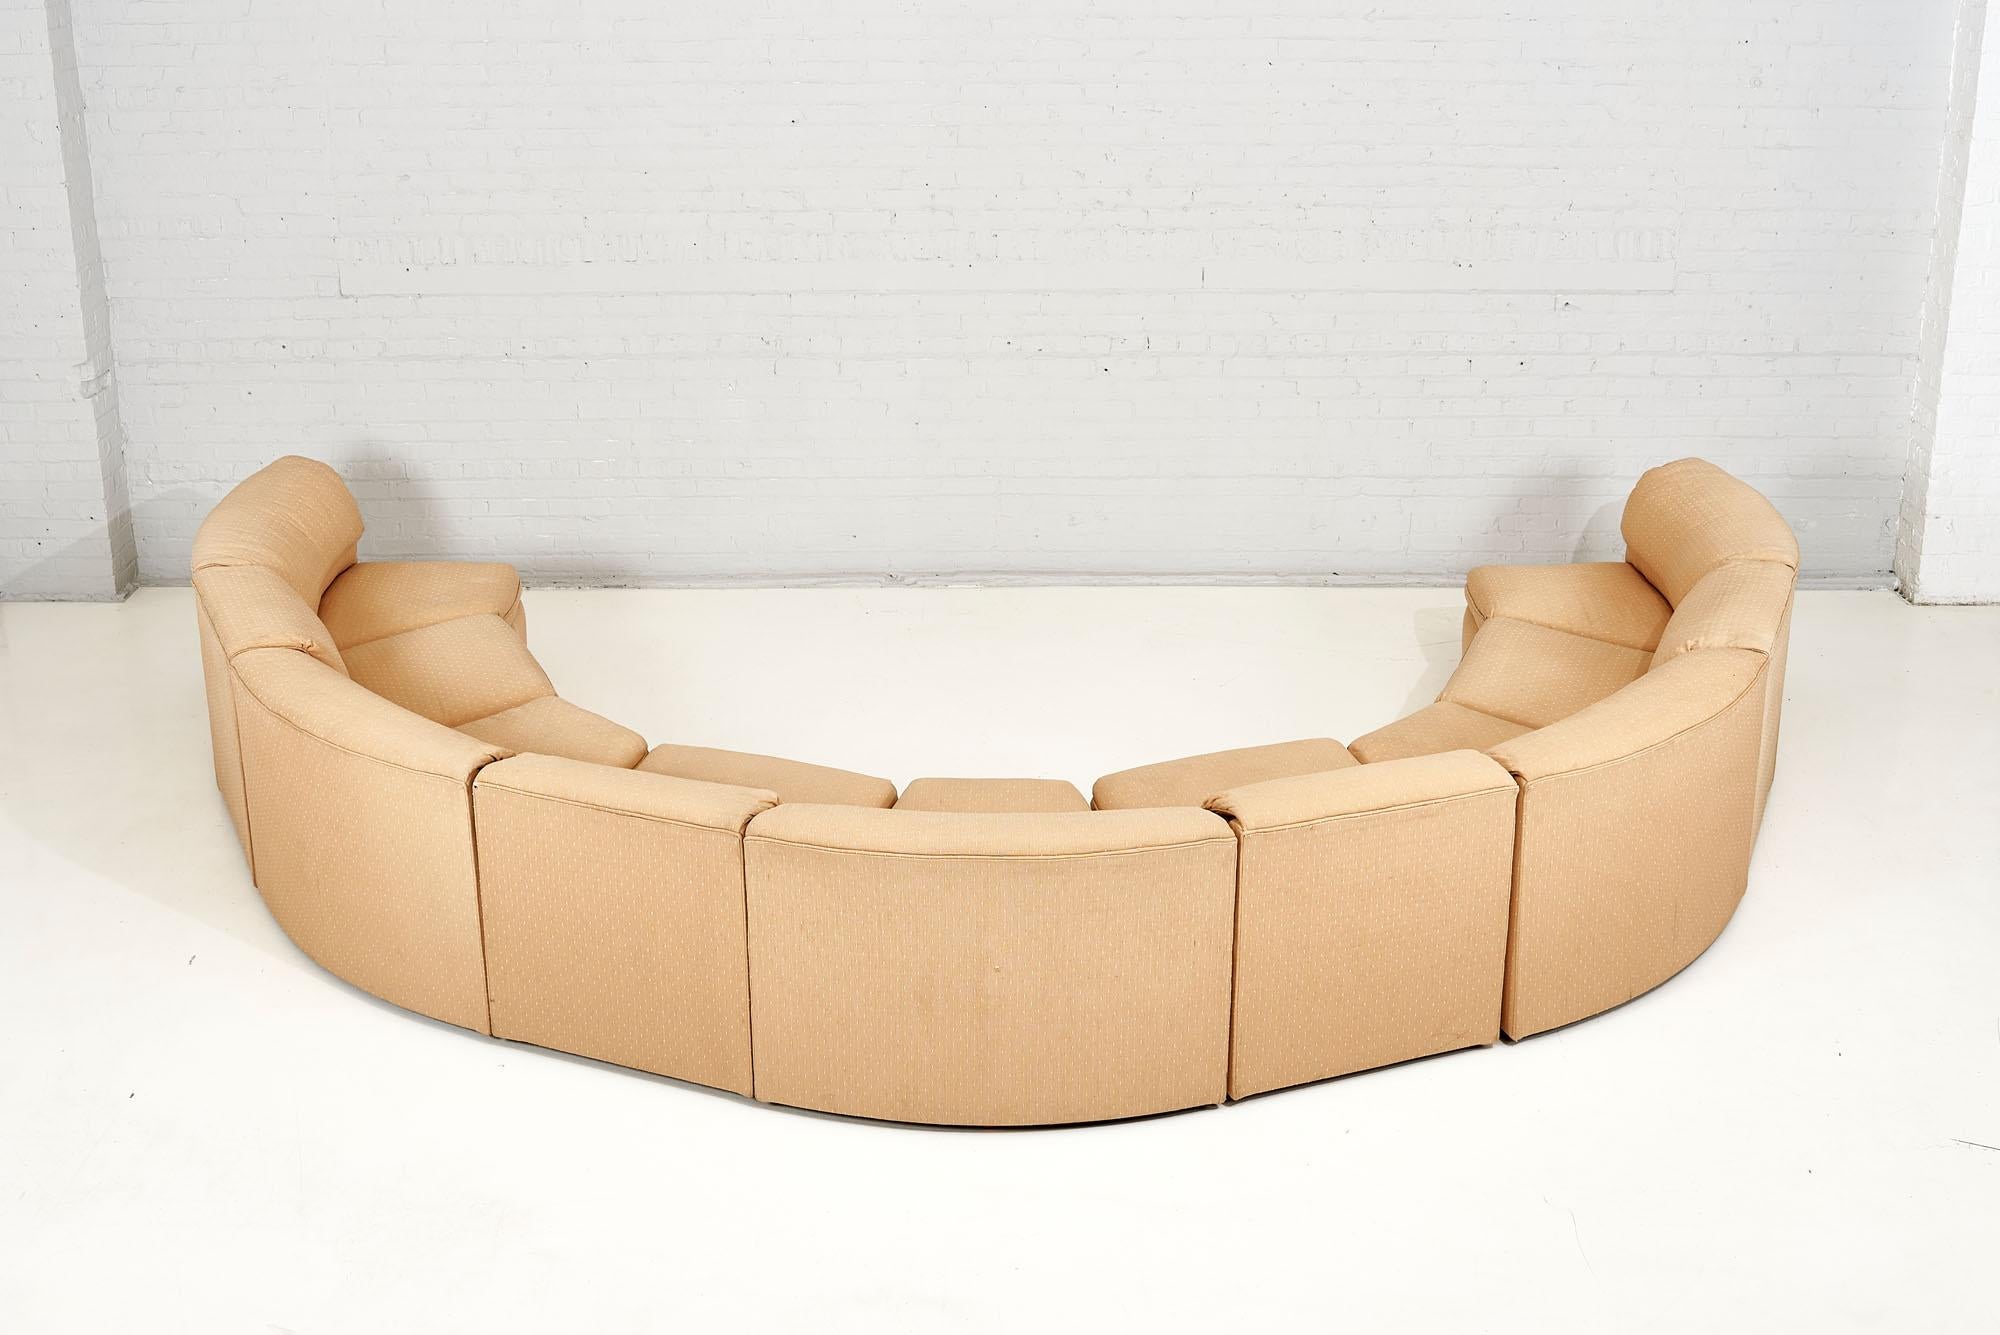 9teiliges modulares Halb-Circle-Sofa, 1970 (Ende des 20. Jahrhunderts)